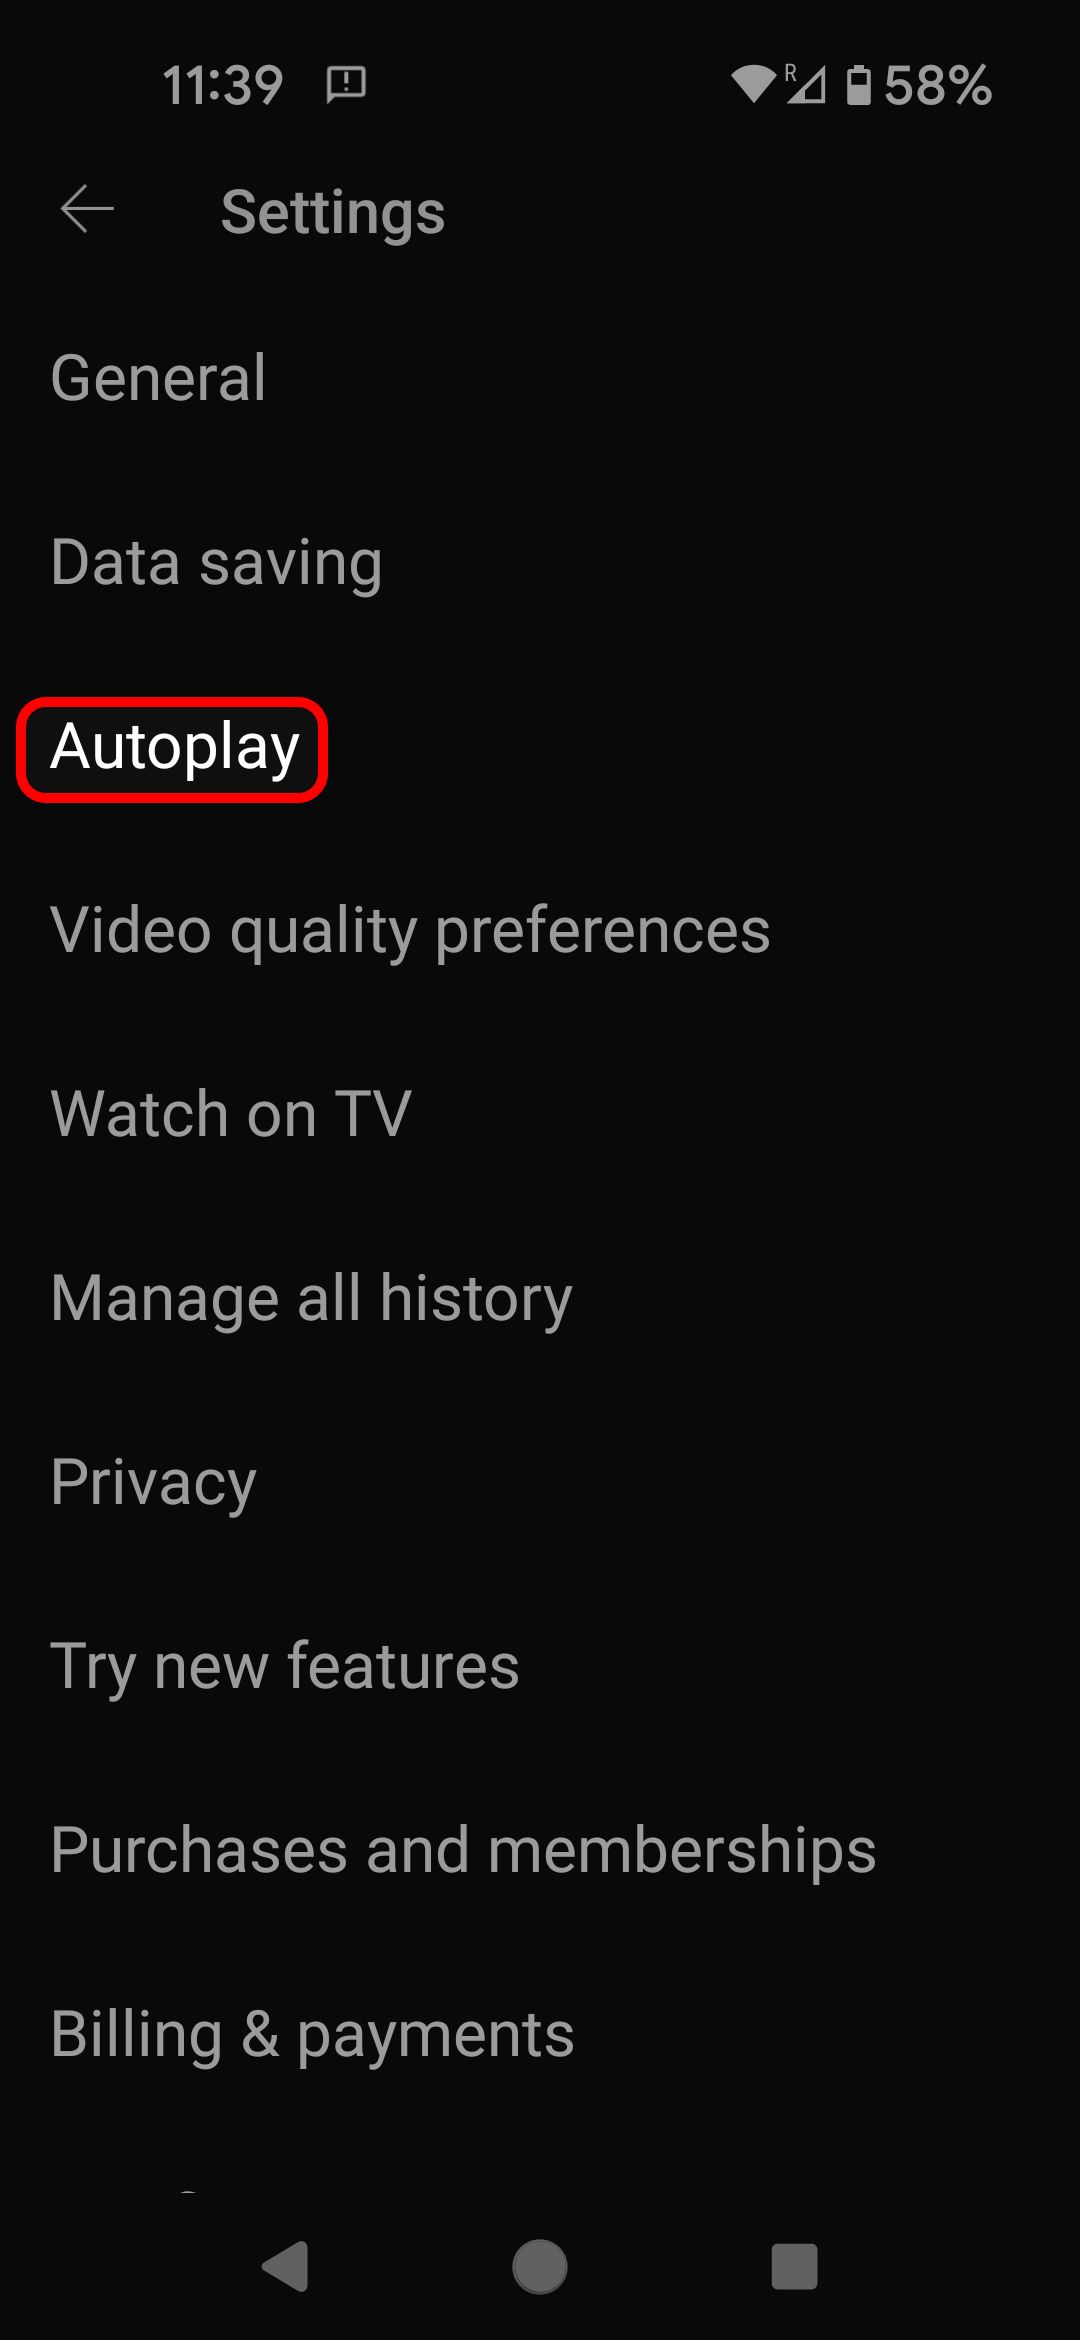 YouTube mobile Settings menu highlighting the Autoplay option